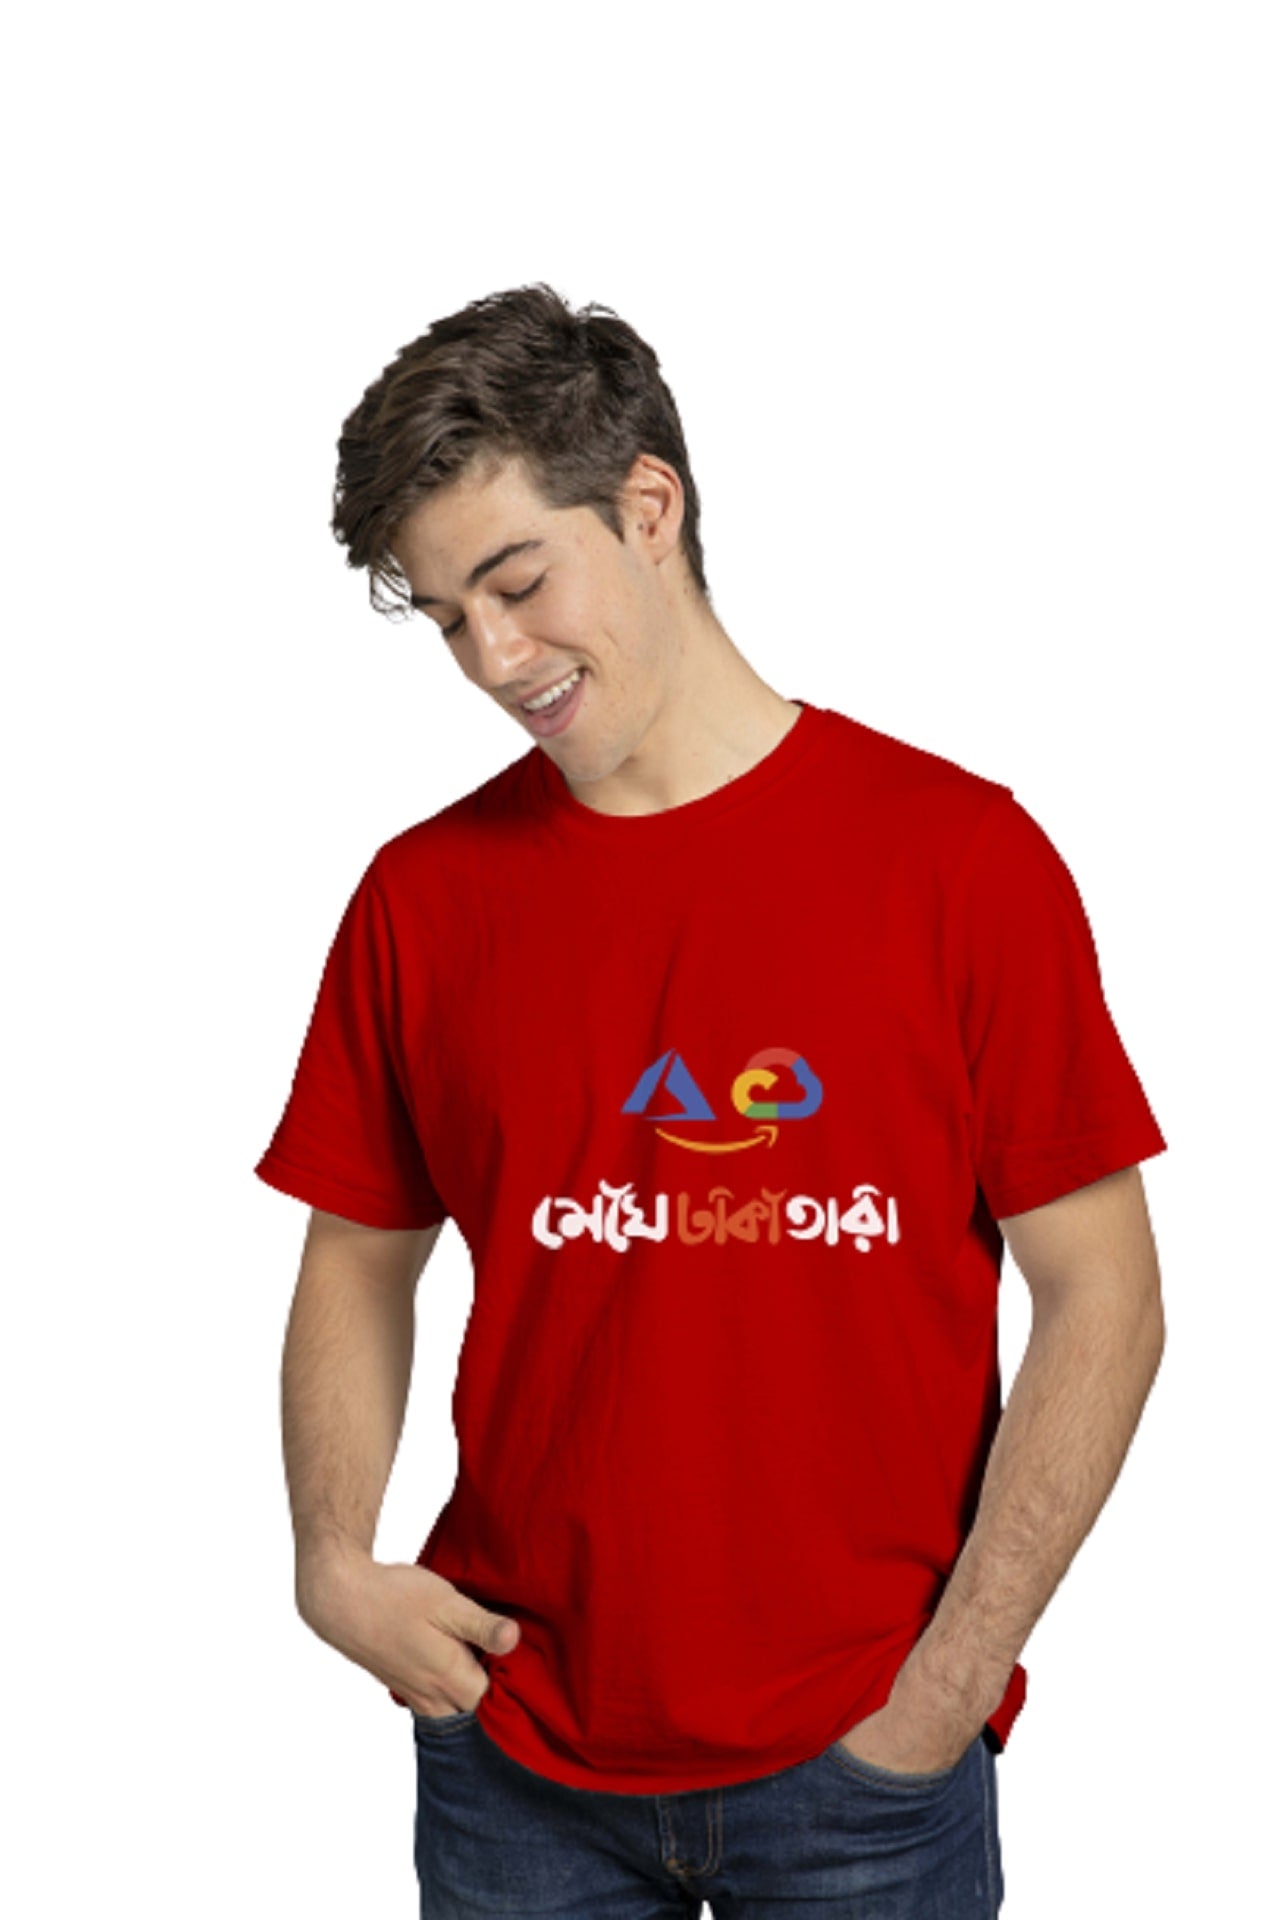 Printed T Shirt Online